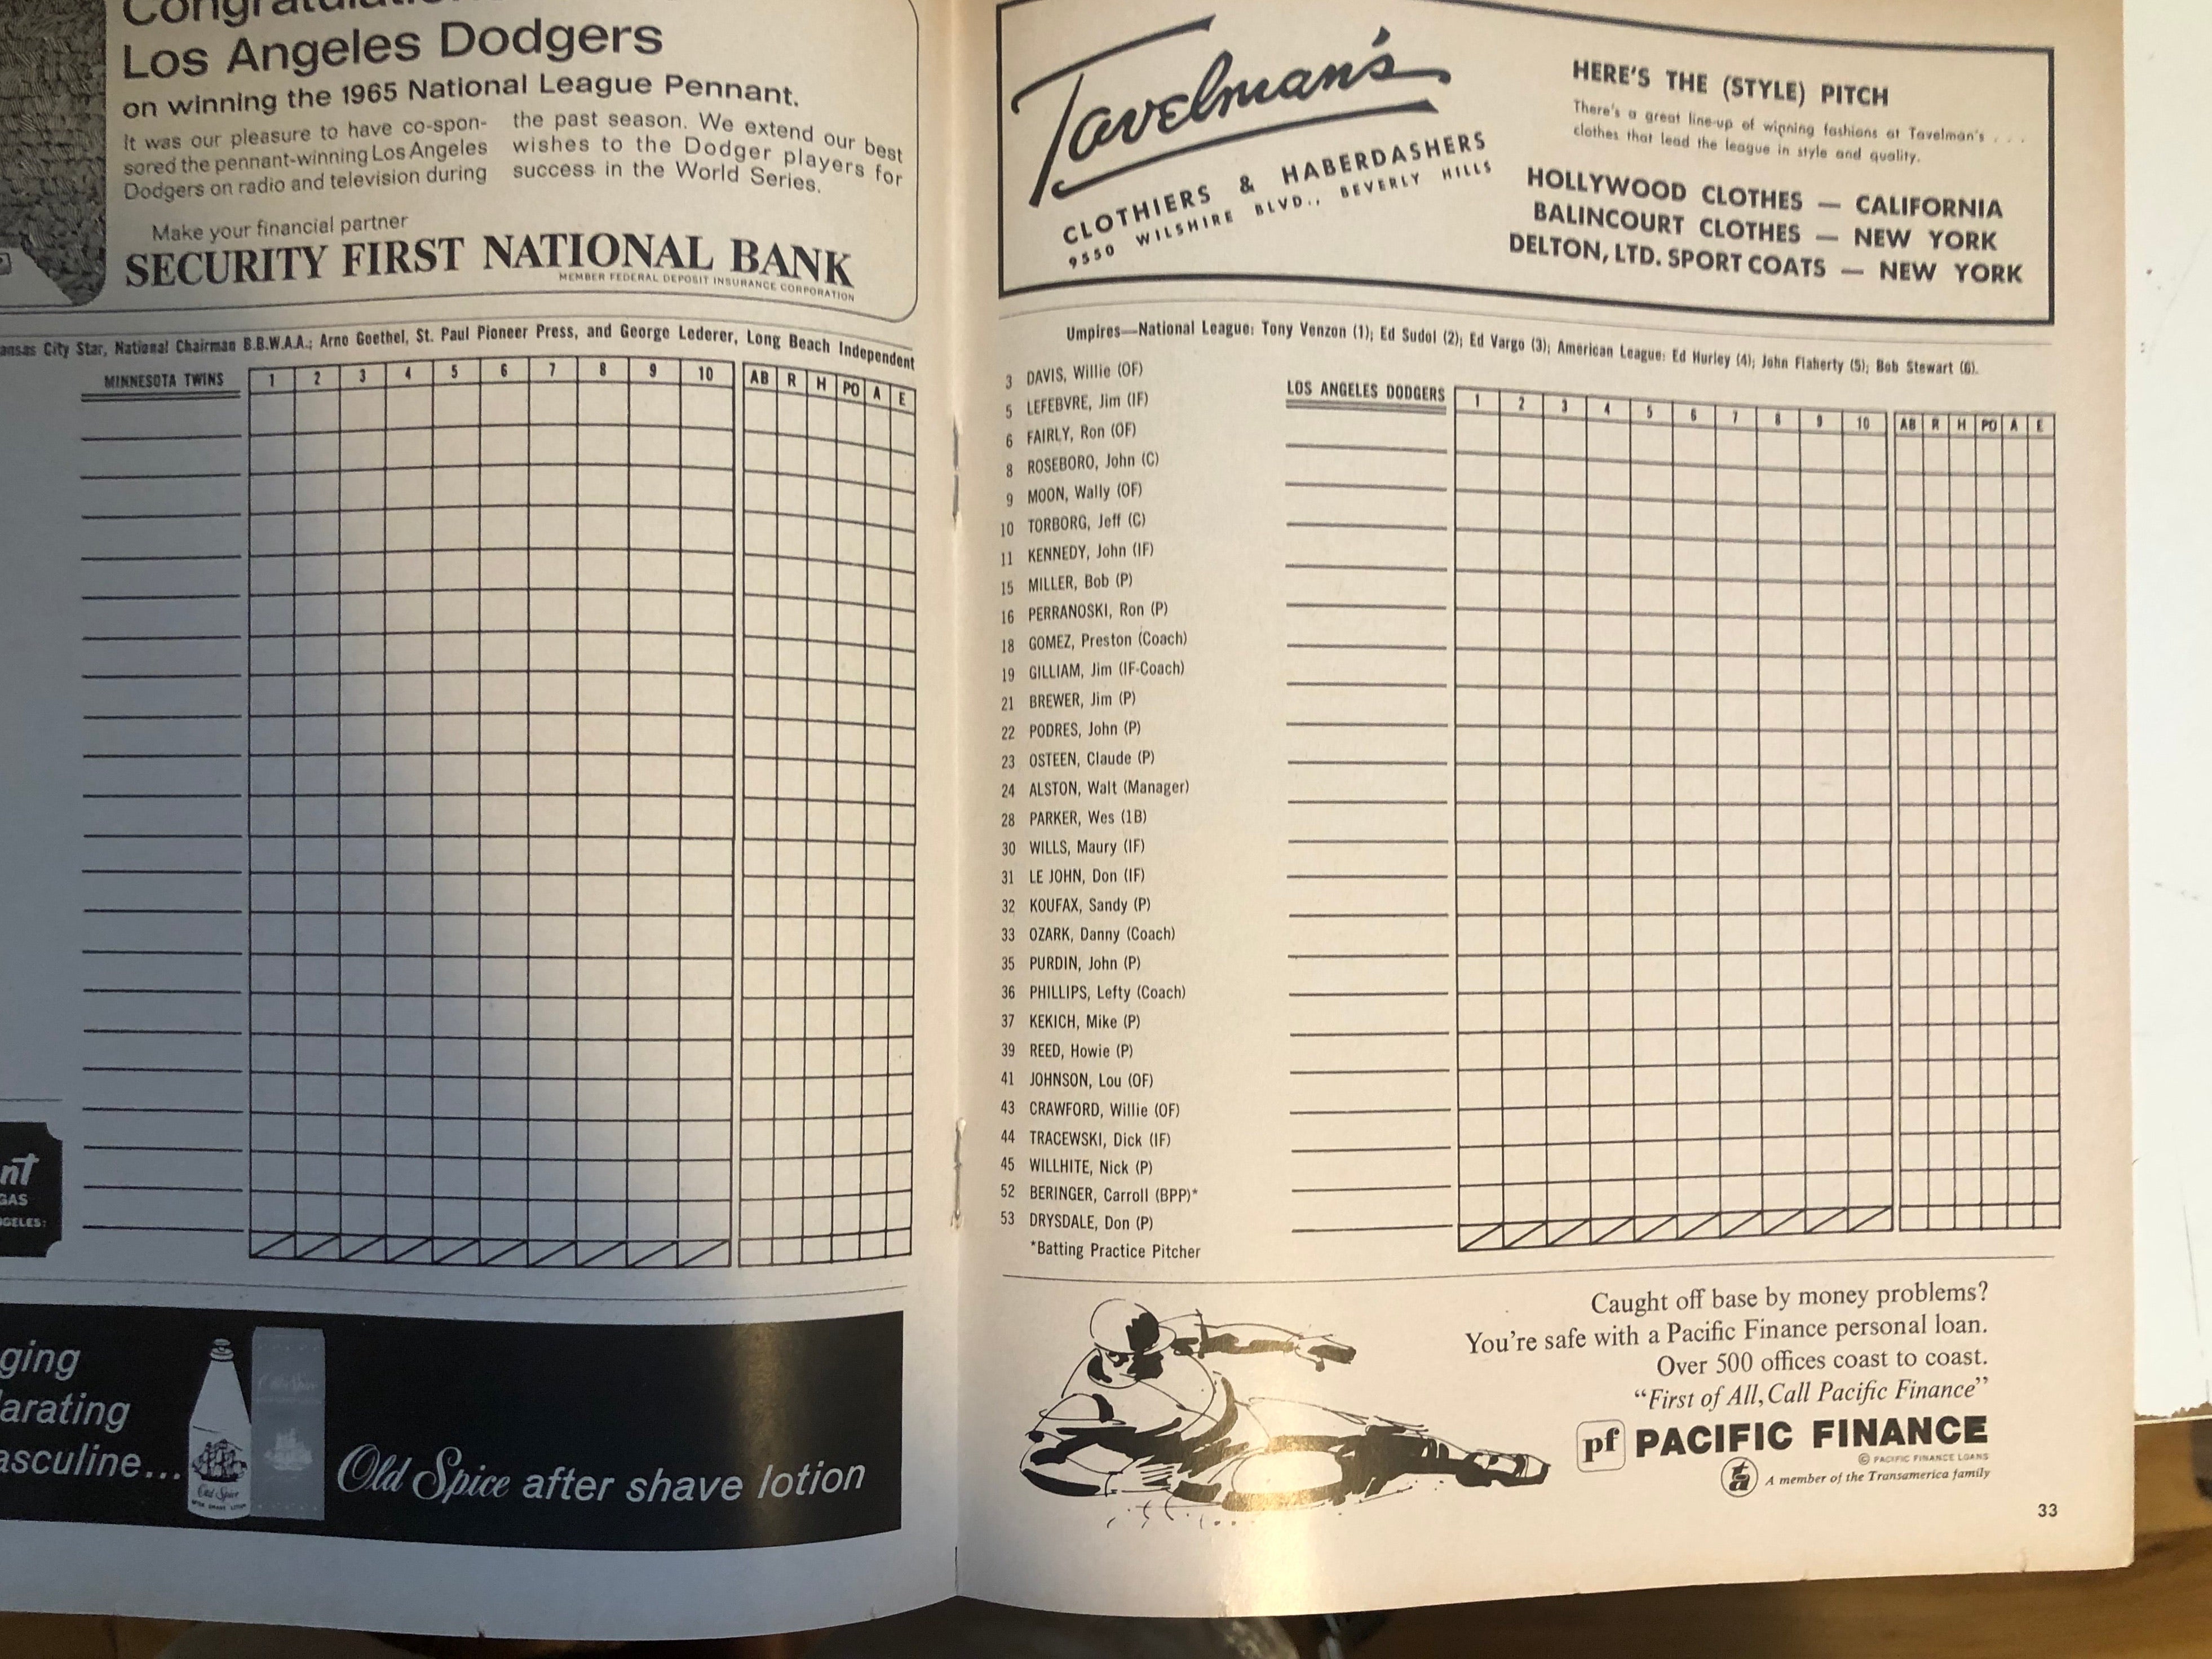 1965 World Series original baseball game program